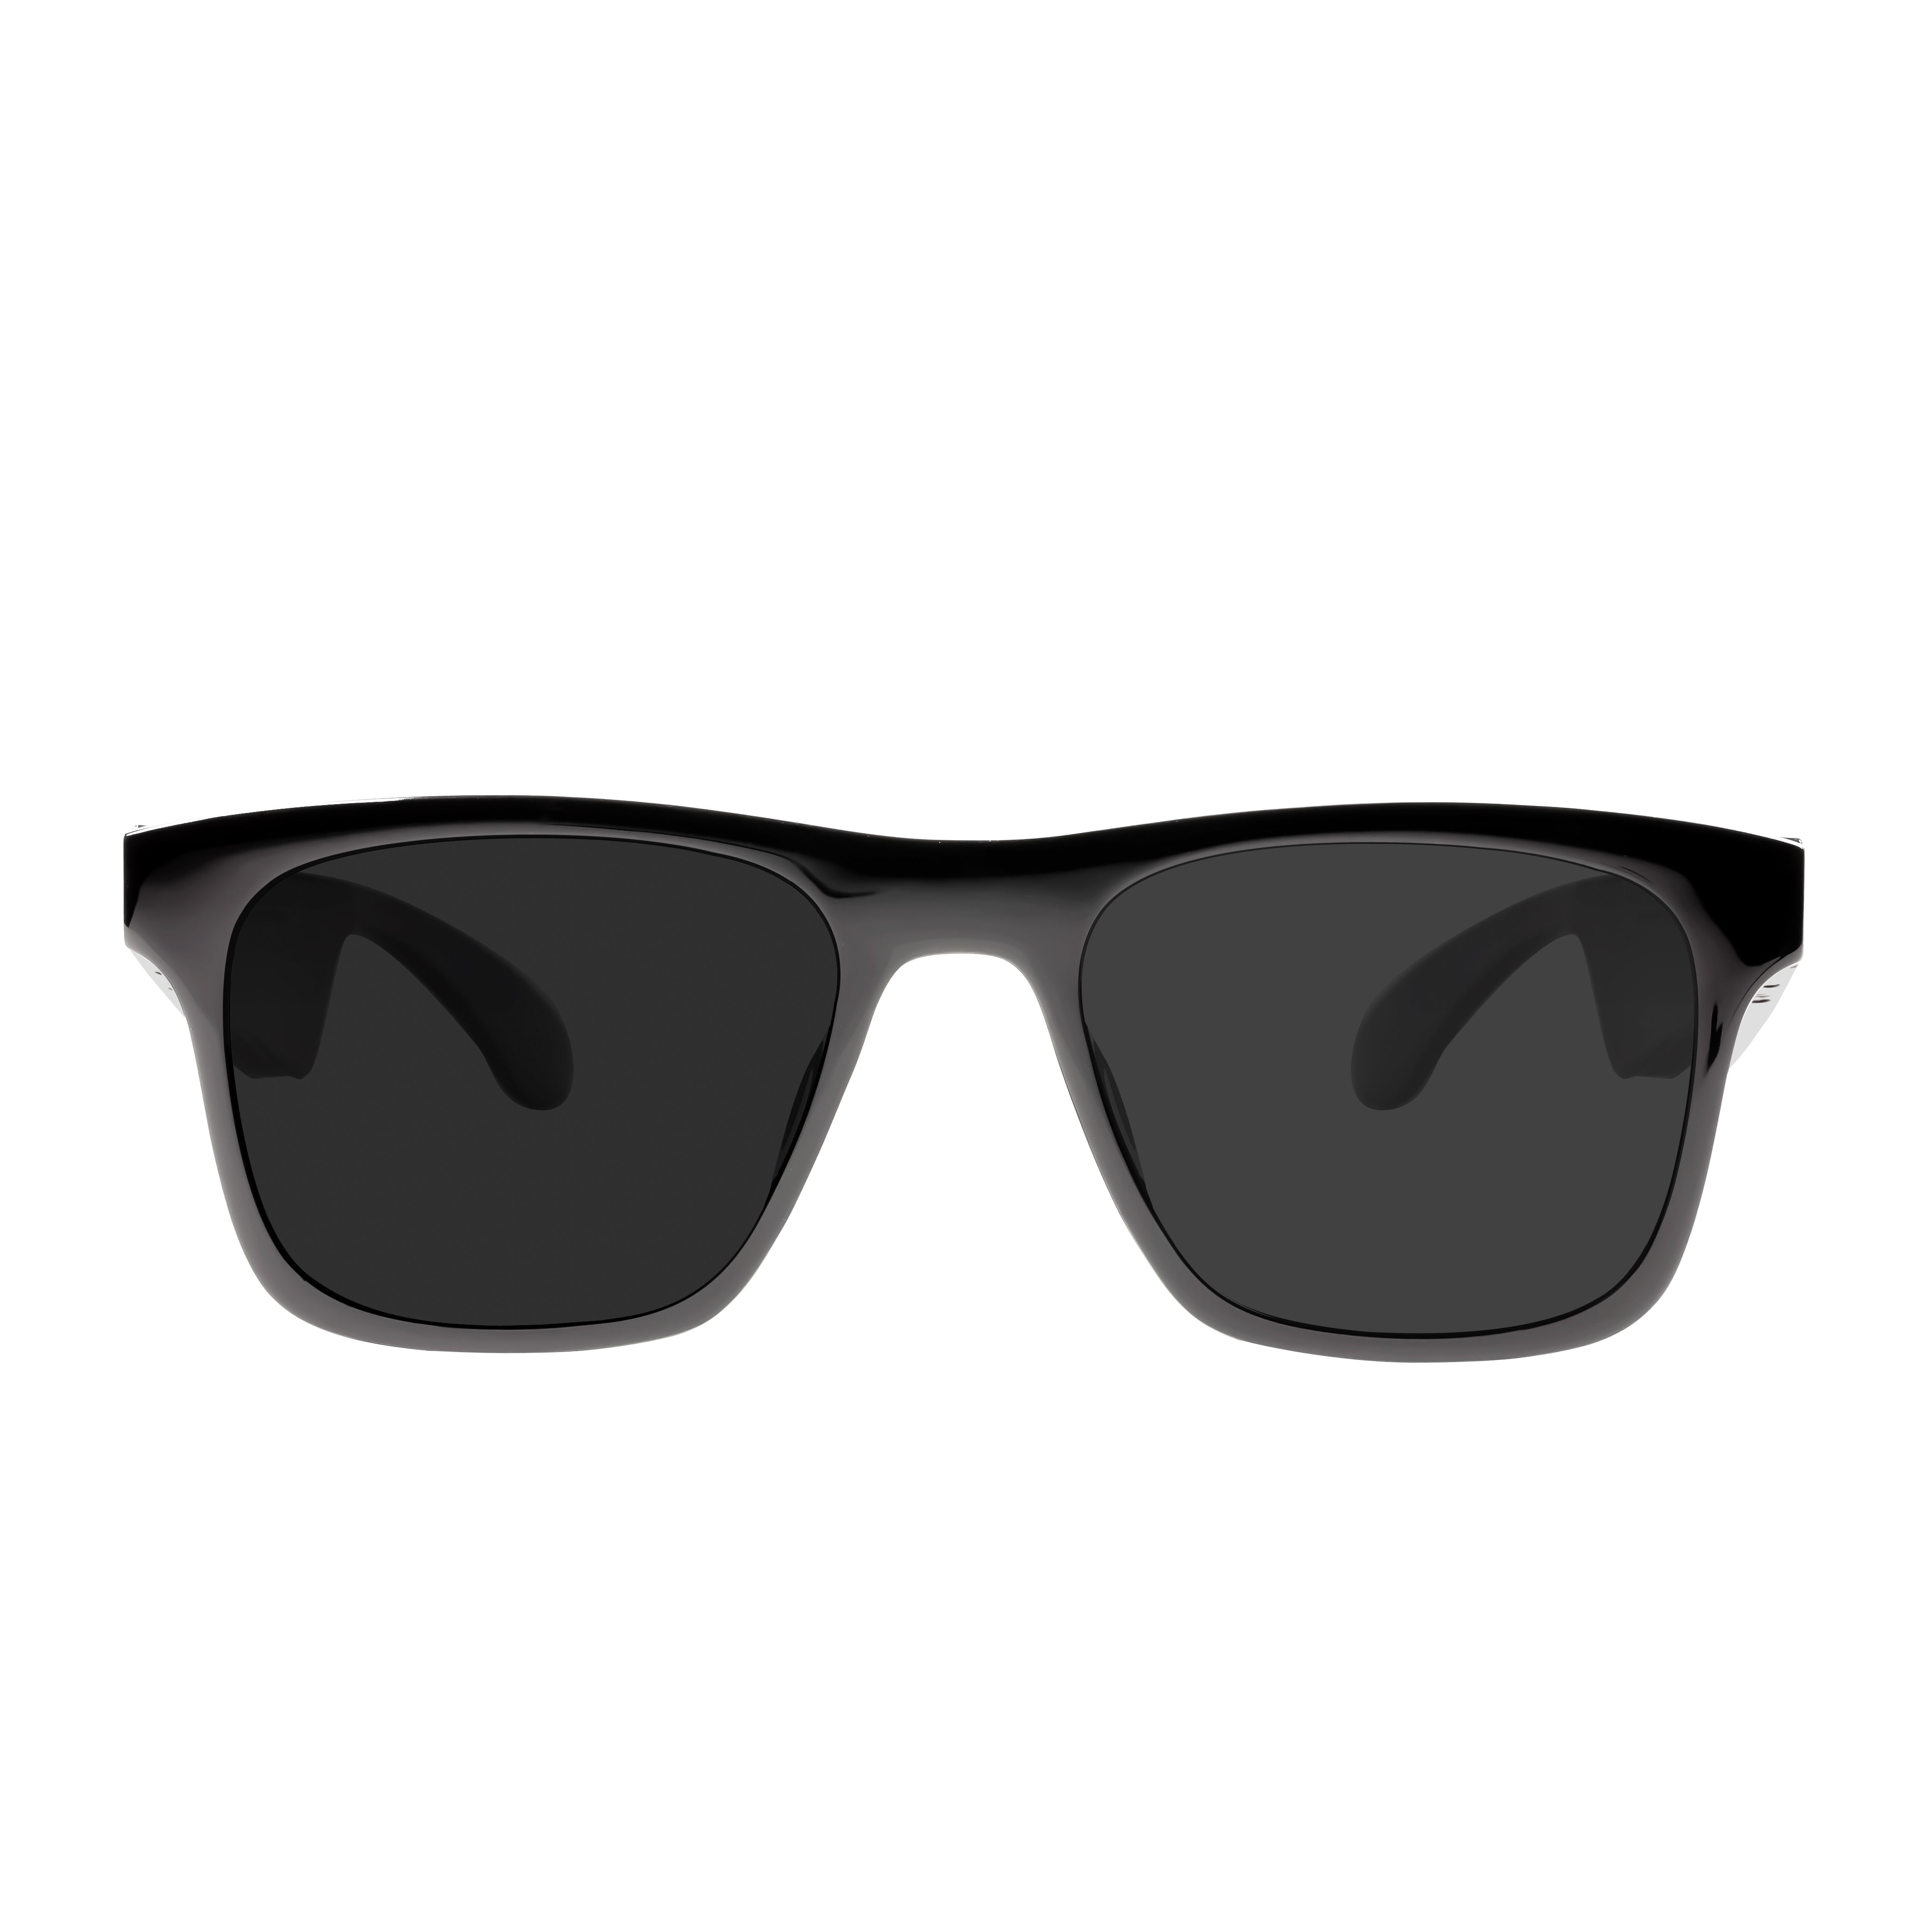 Audio Smart Glasses E13 Wireless Bluetooth Headset Sunglasses